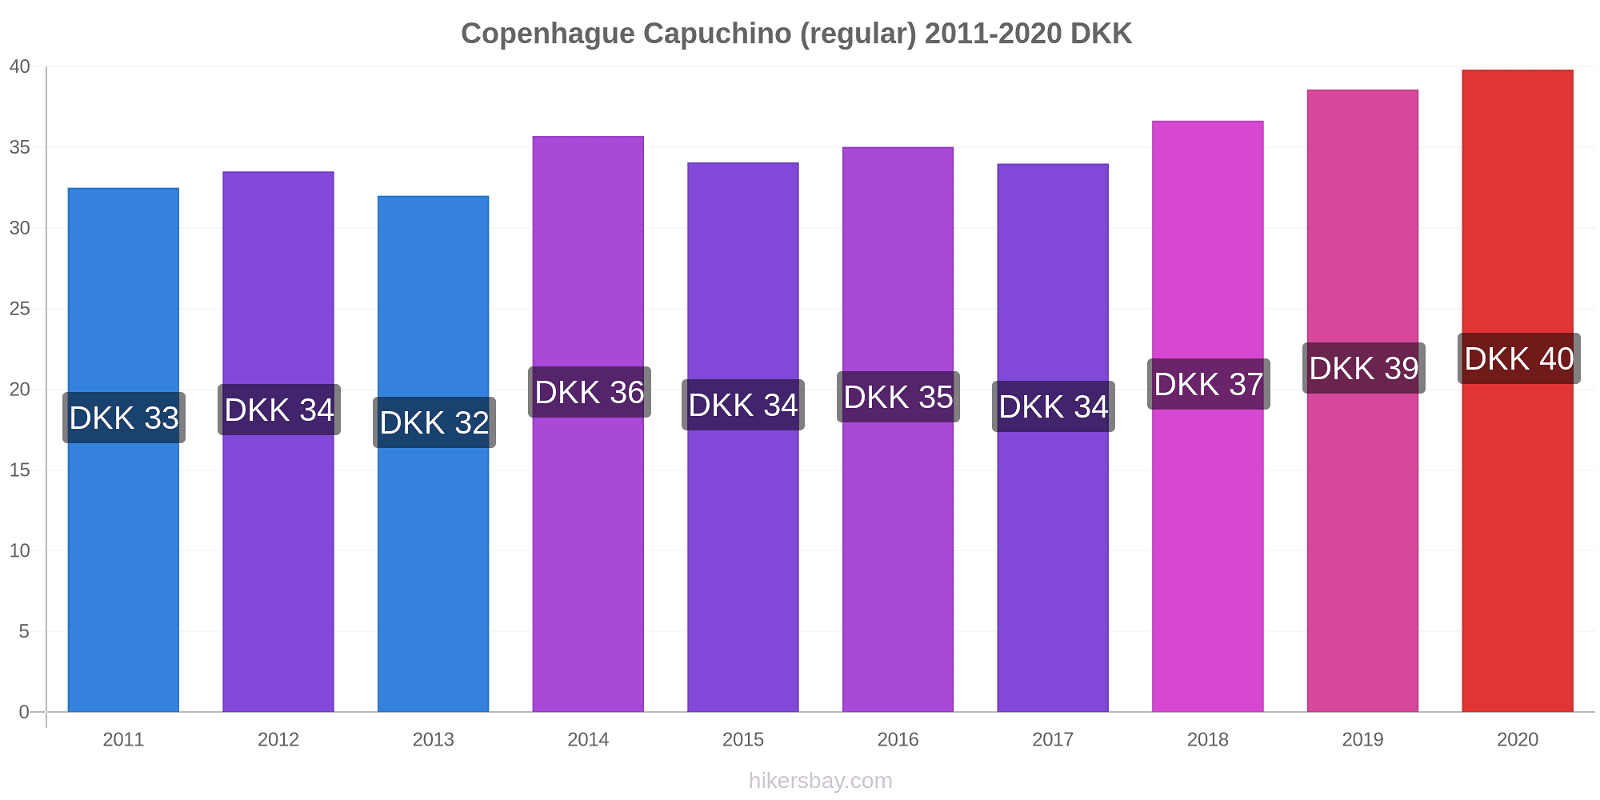 Copenhague cambios de precios Capuchino (regular) hikersbay.com